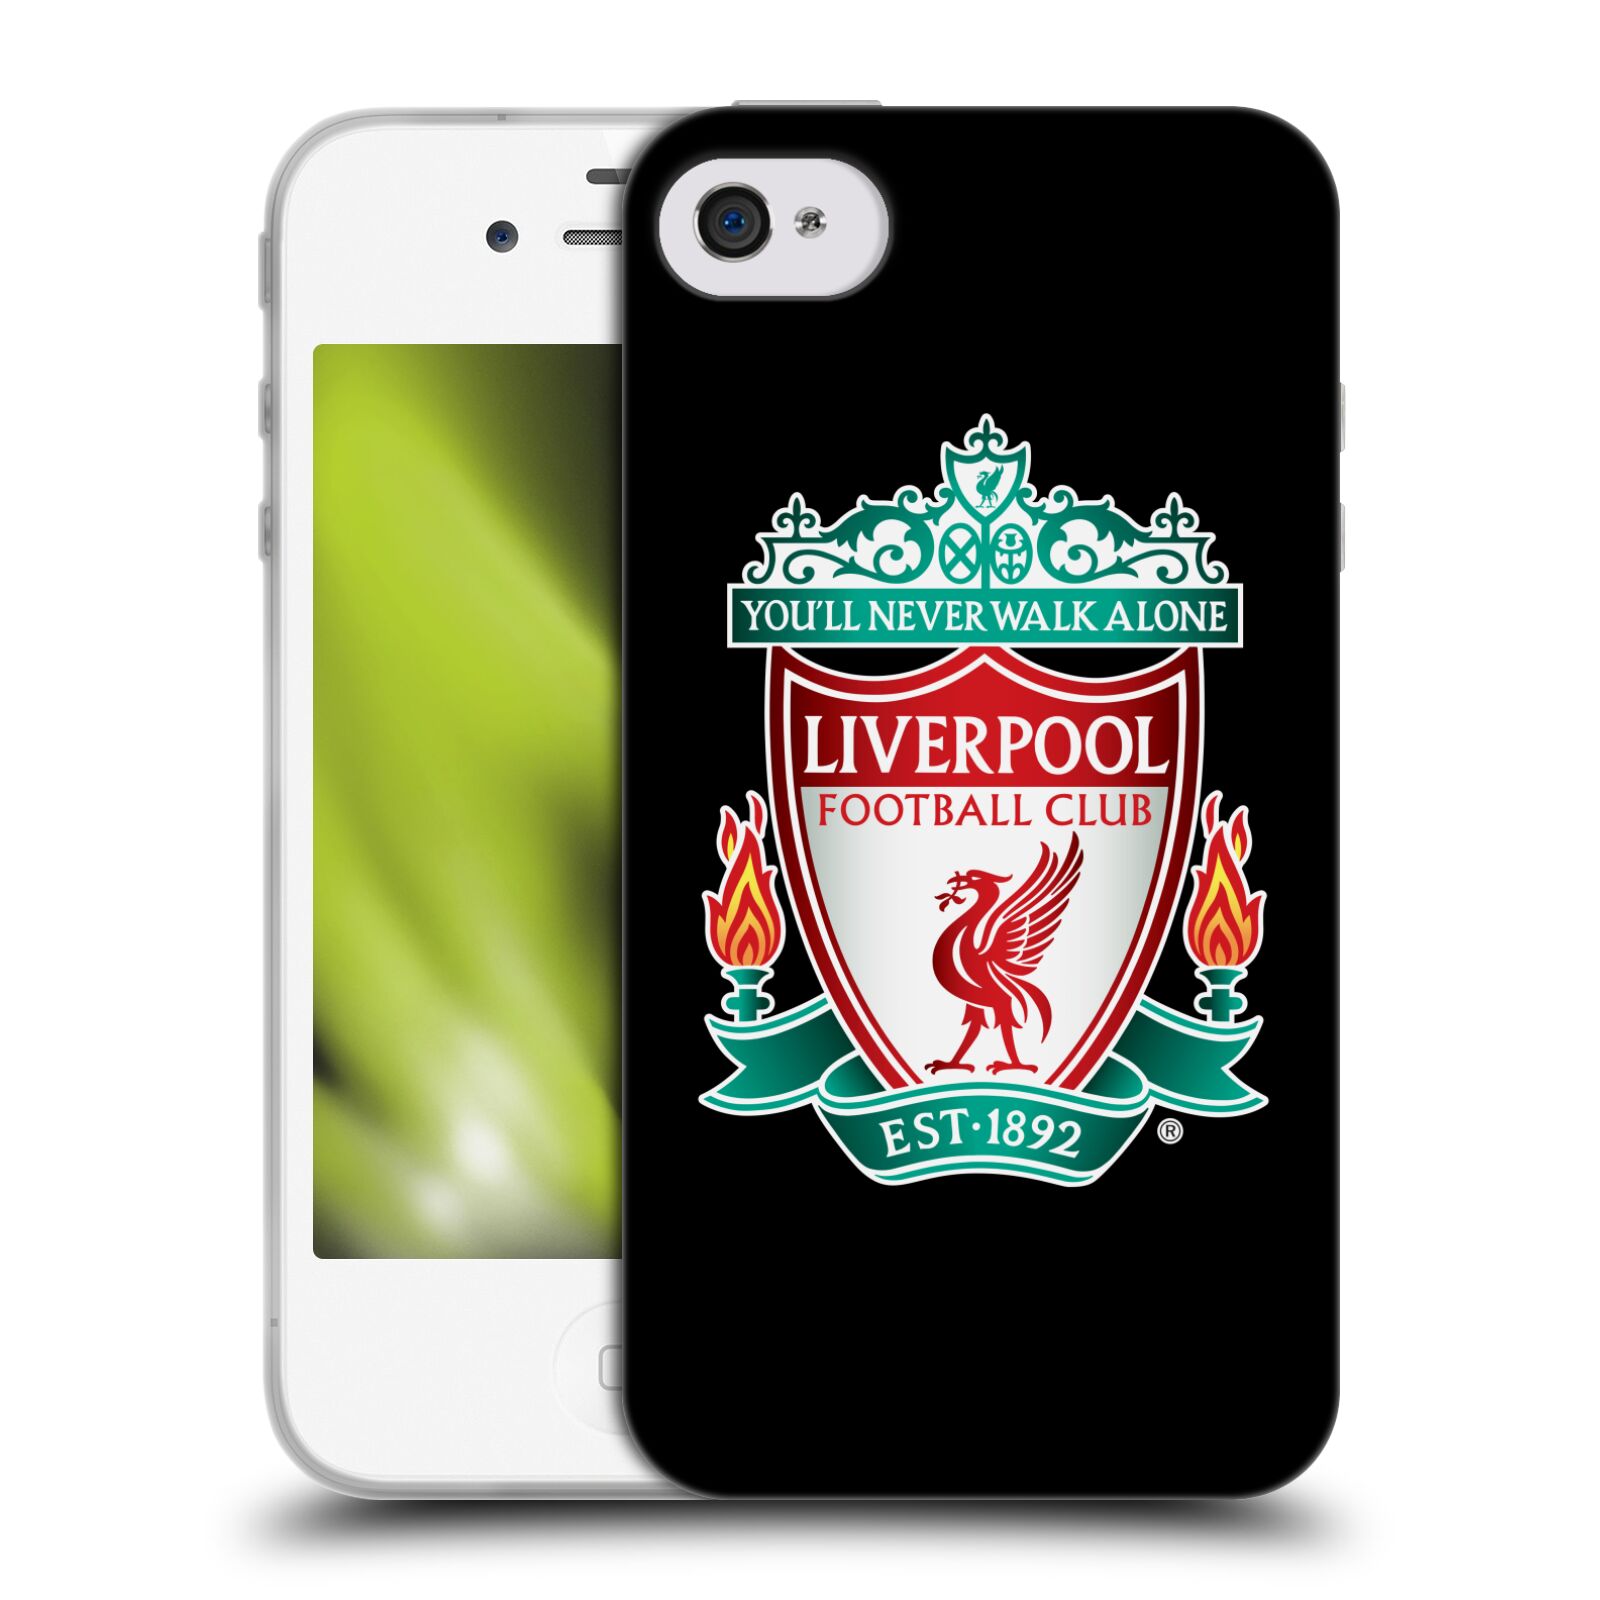 HEAD CASE silikonový obal na mobil Apple Iphone 4/4S Fotbalový klub Liverpool barevný znak černé pozadí